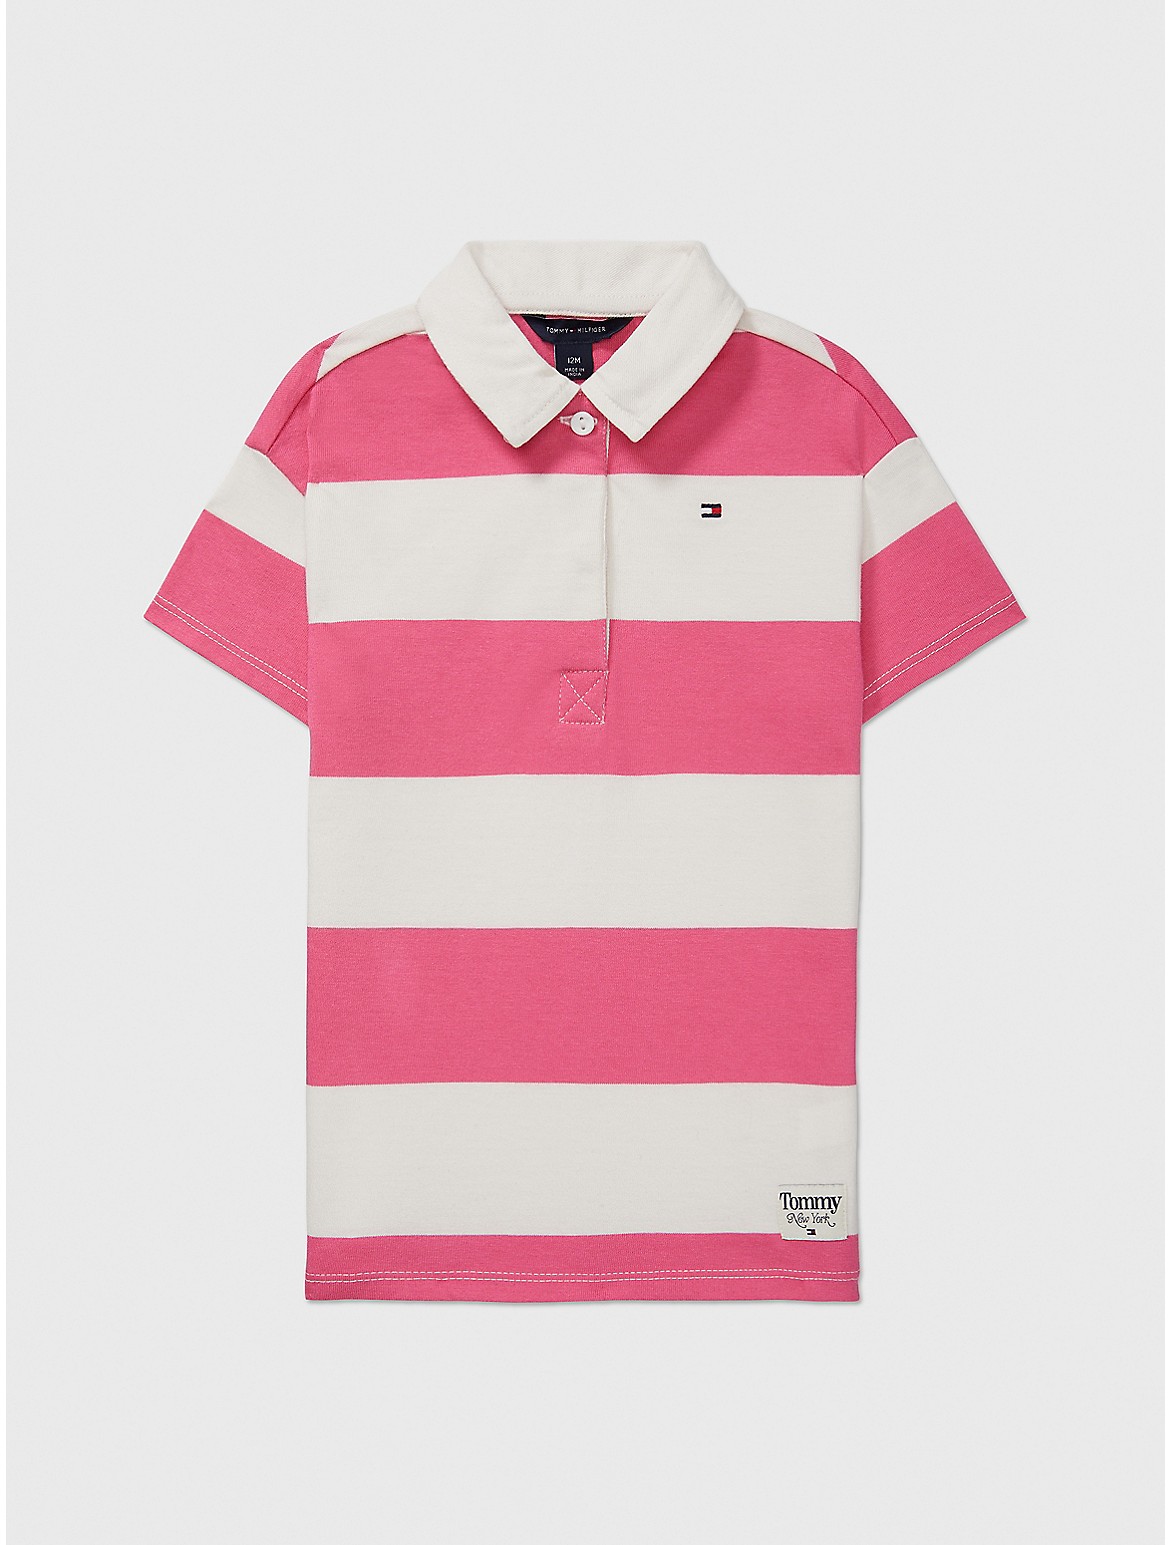 Tommy Hilfiger Girls' Babies' Rugby Stripe Dress - Pink - 18M